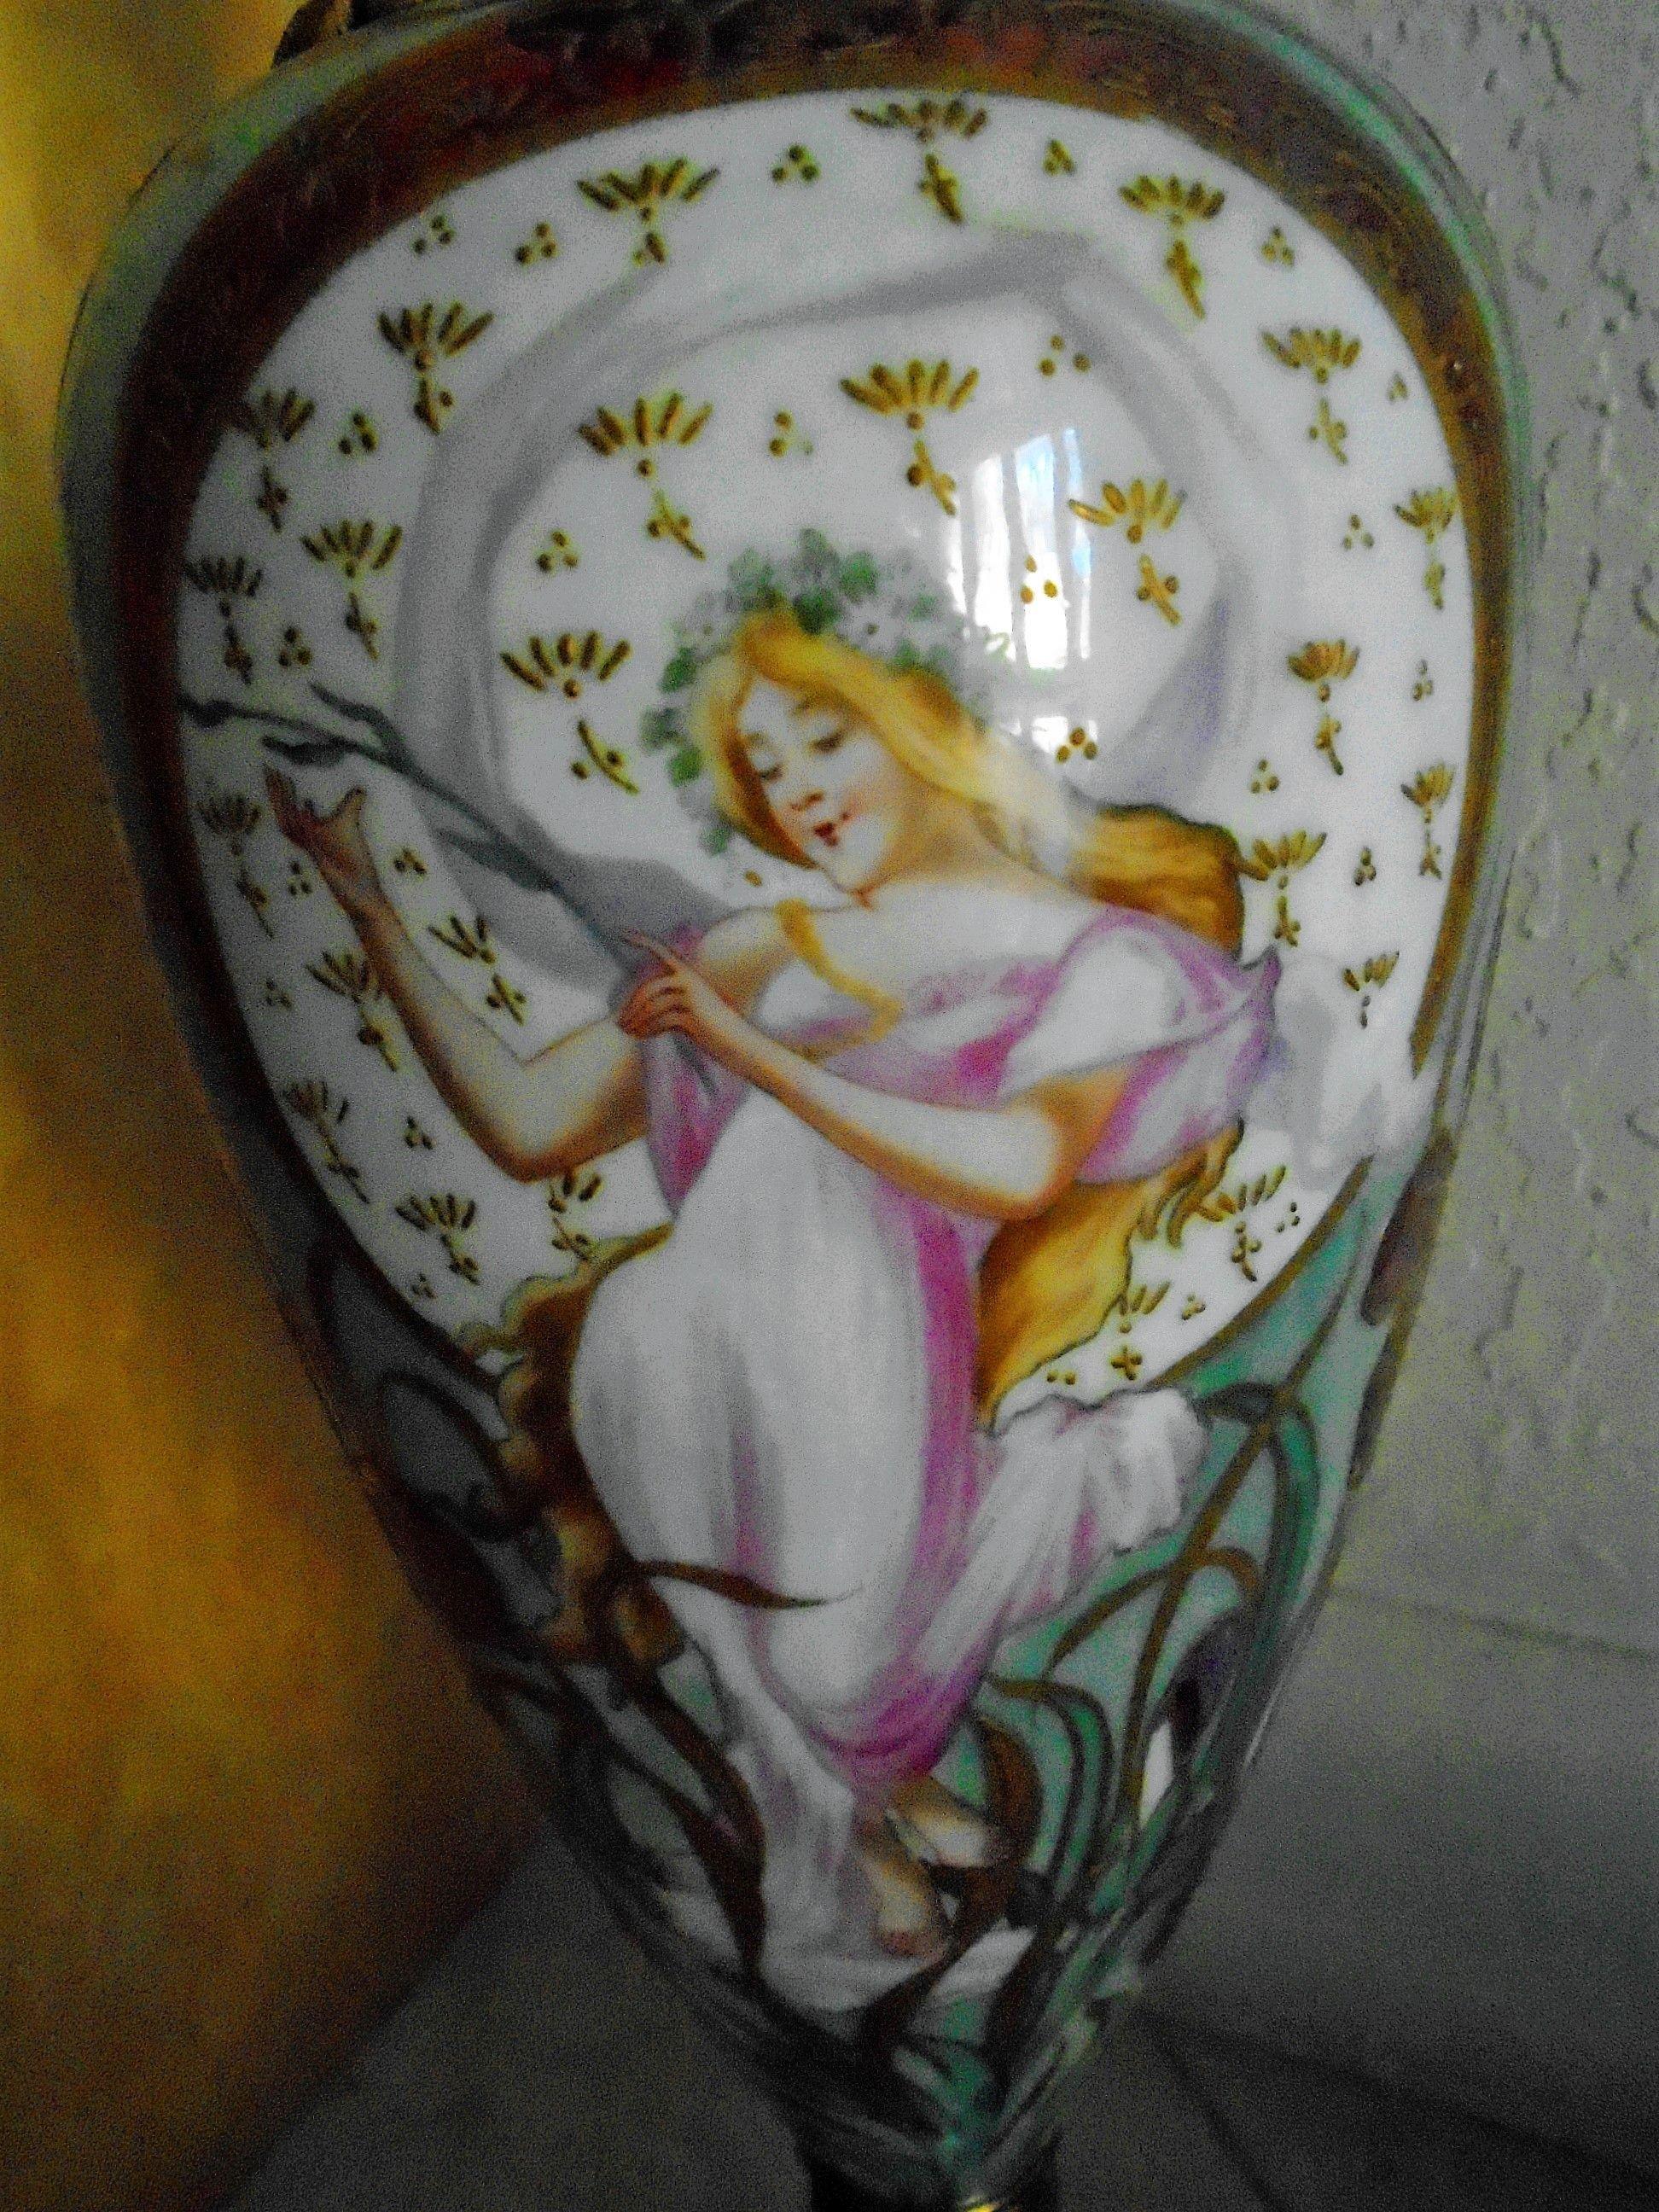 Serves French porcelain vase, light green with woman & floral design